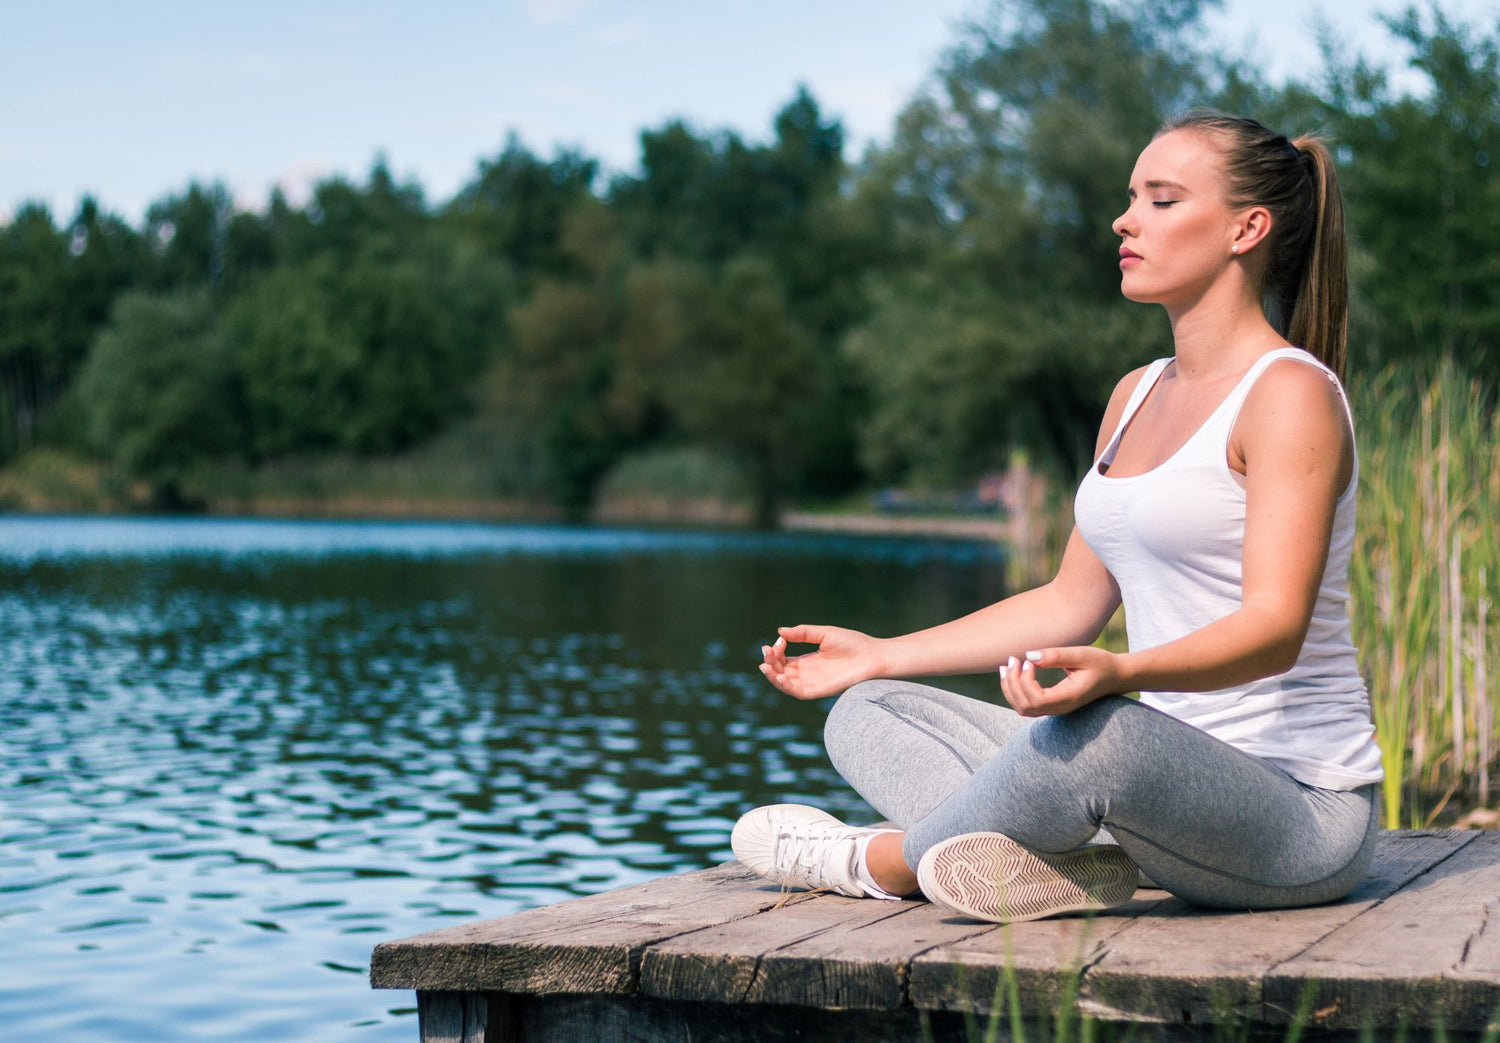 Morning Meditation Benefits